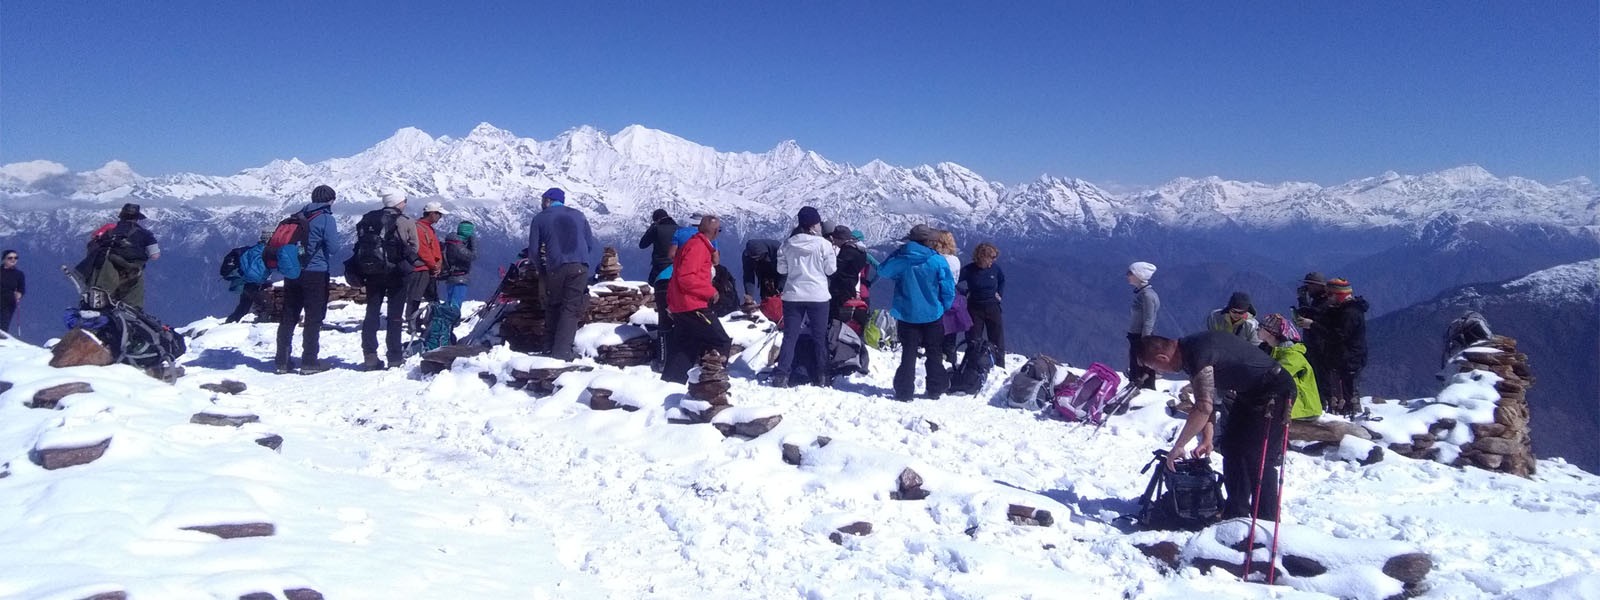 Rupina-La Pass with Ganesh Himal Trekking